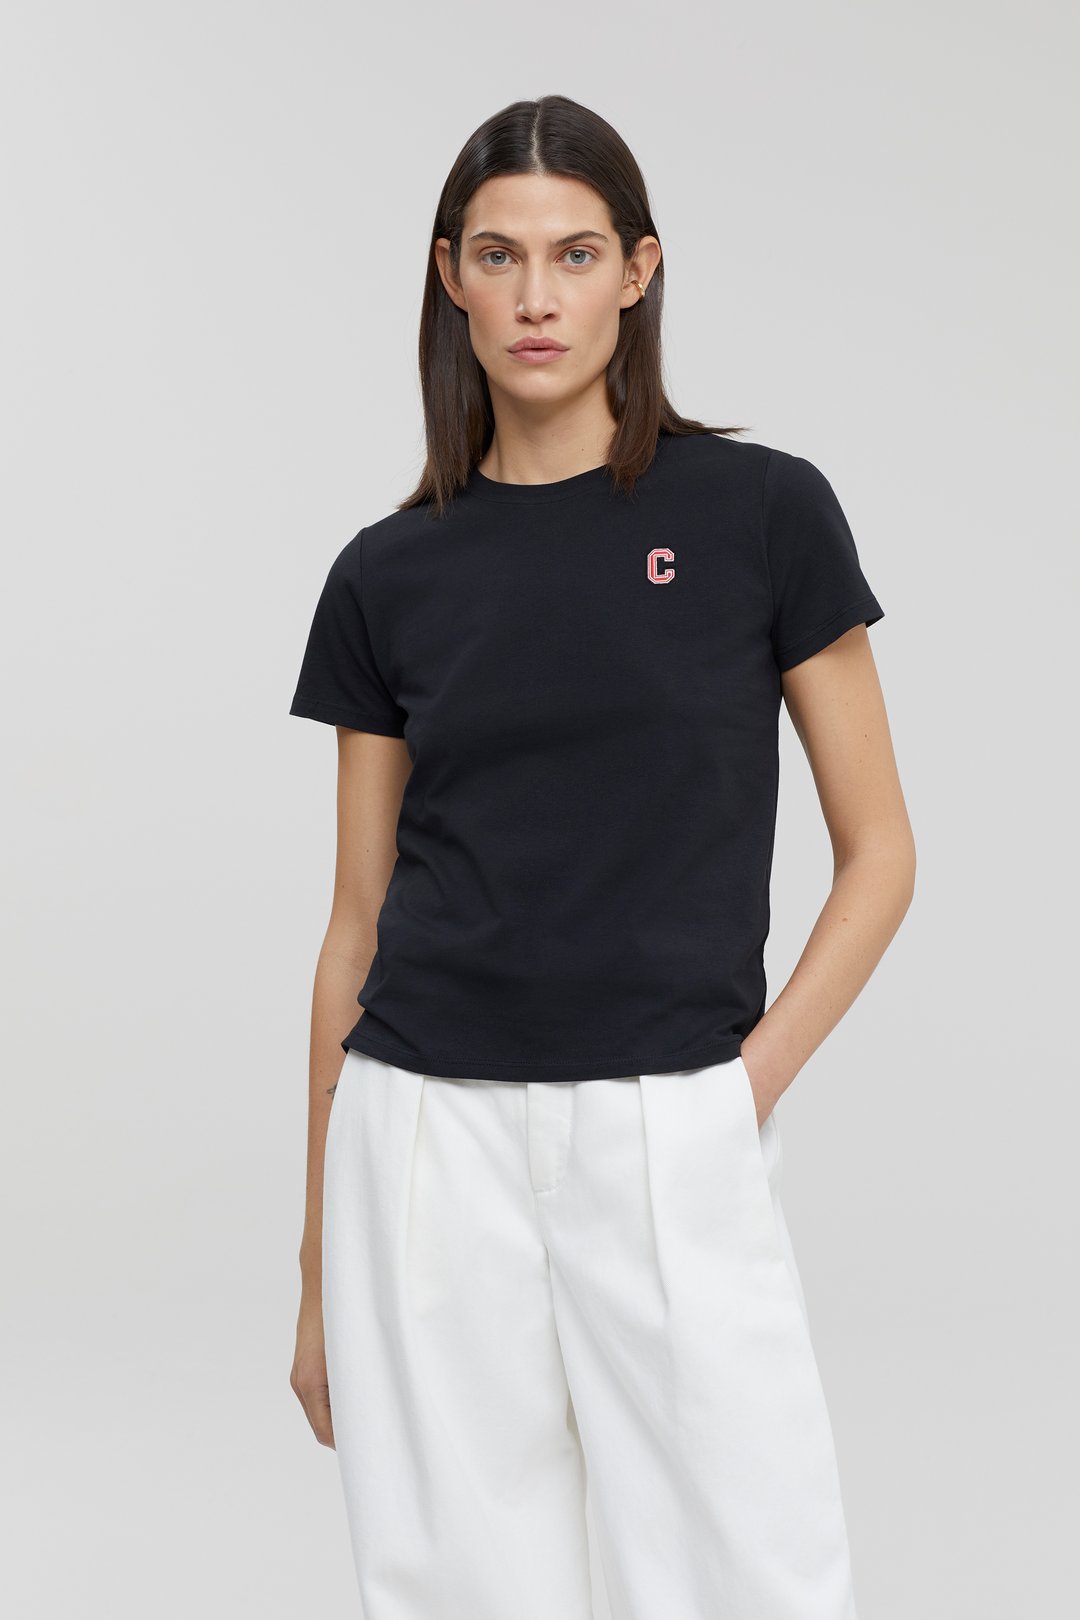 WOMEN FASHION Shirts & T-shirts Tunic Embroidery Beige S NoName tunic discount 95% 